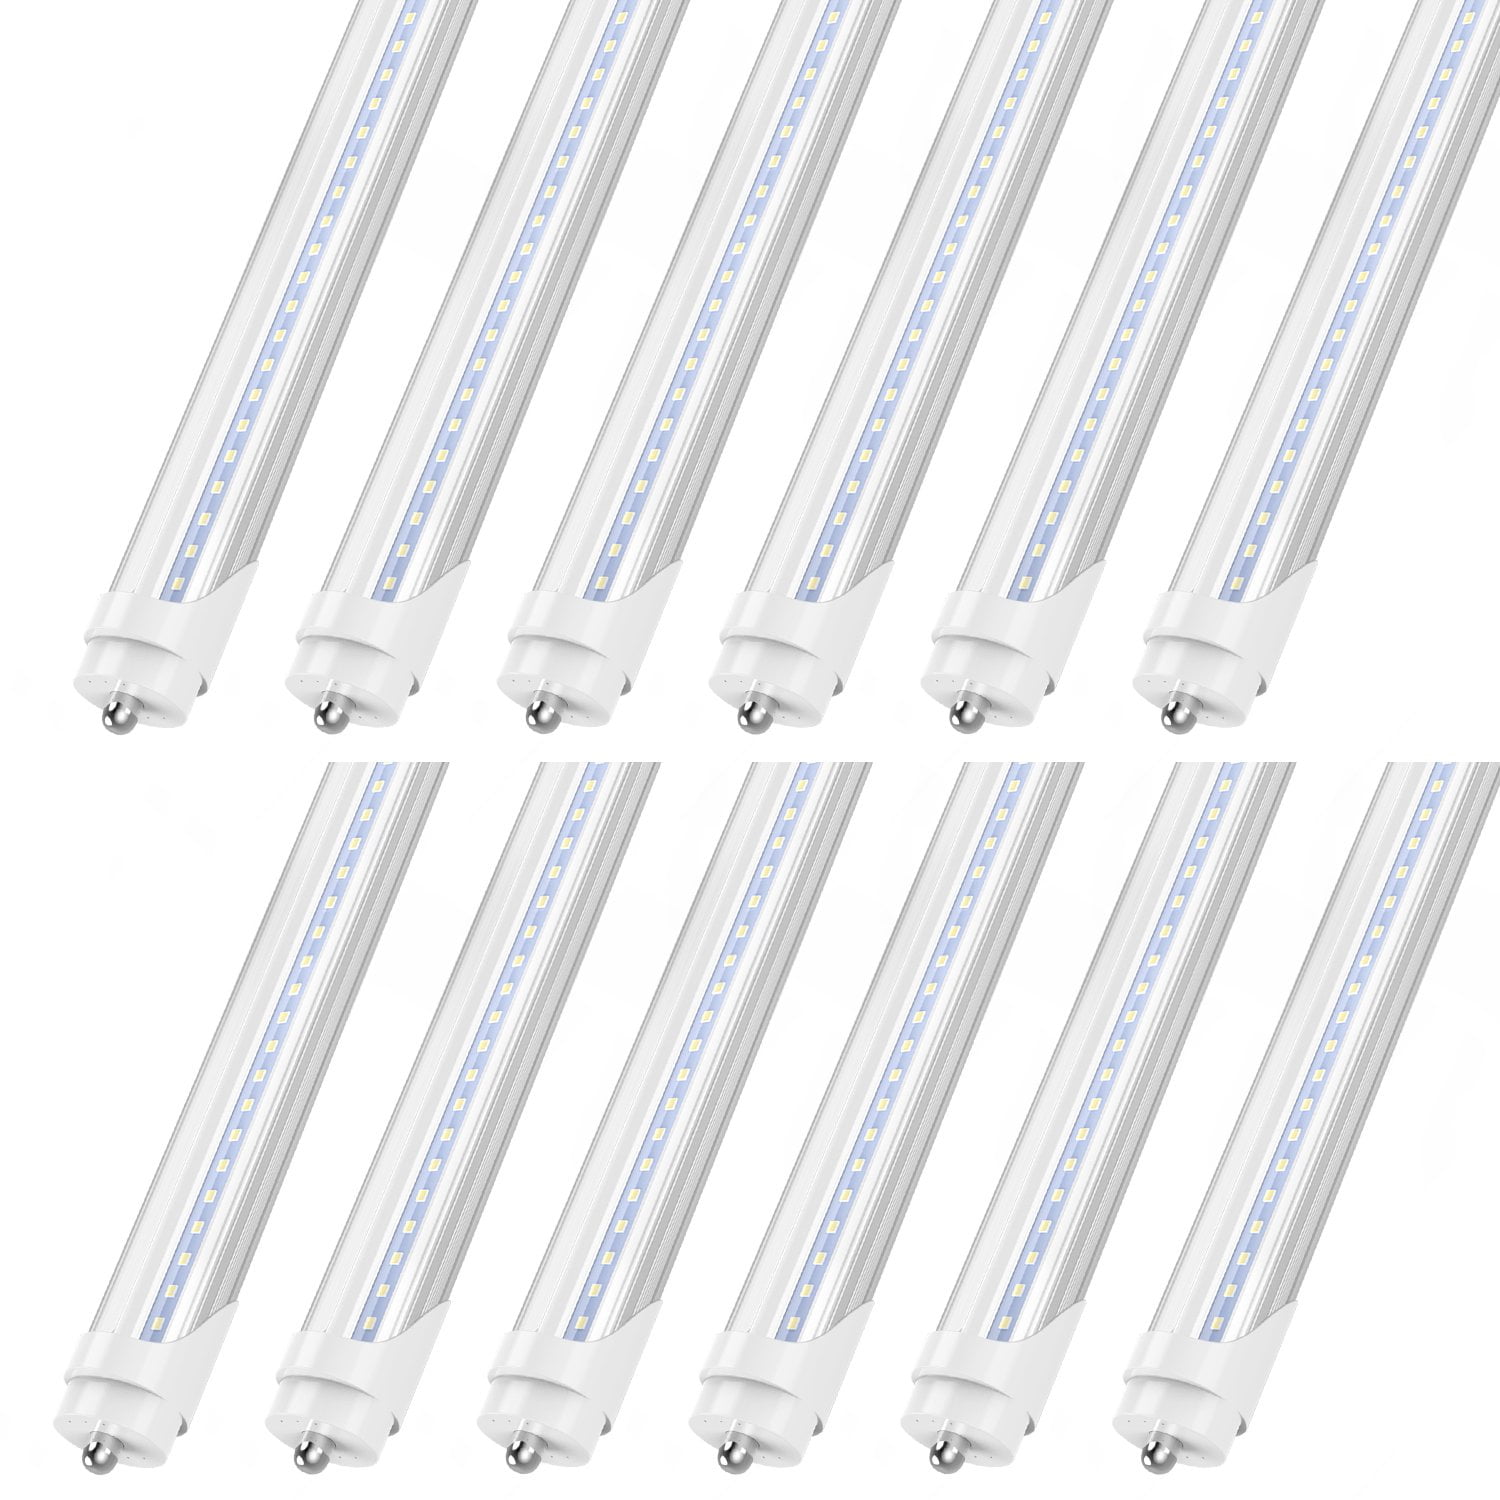 Details about   T8  LED Bulb Light  Single Pin FA8 45W 8FT LED  Replace Fluorescent Tube Light 